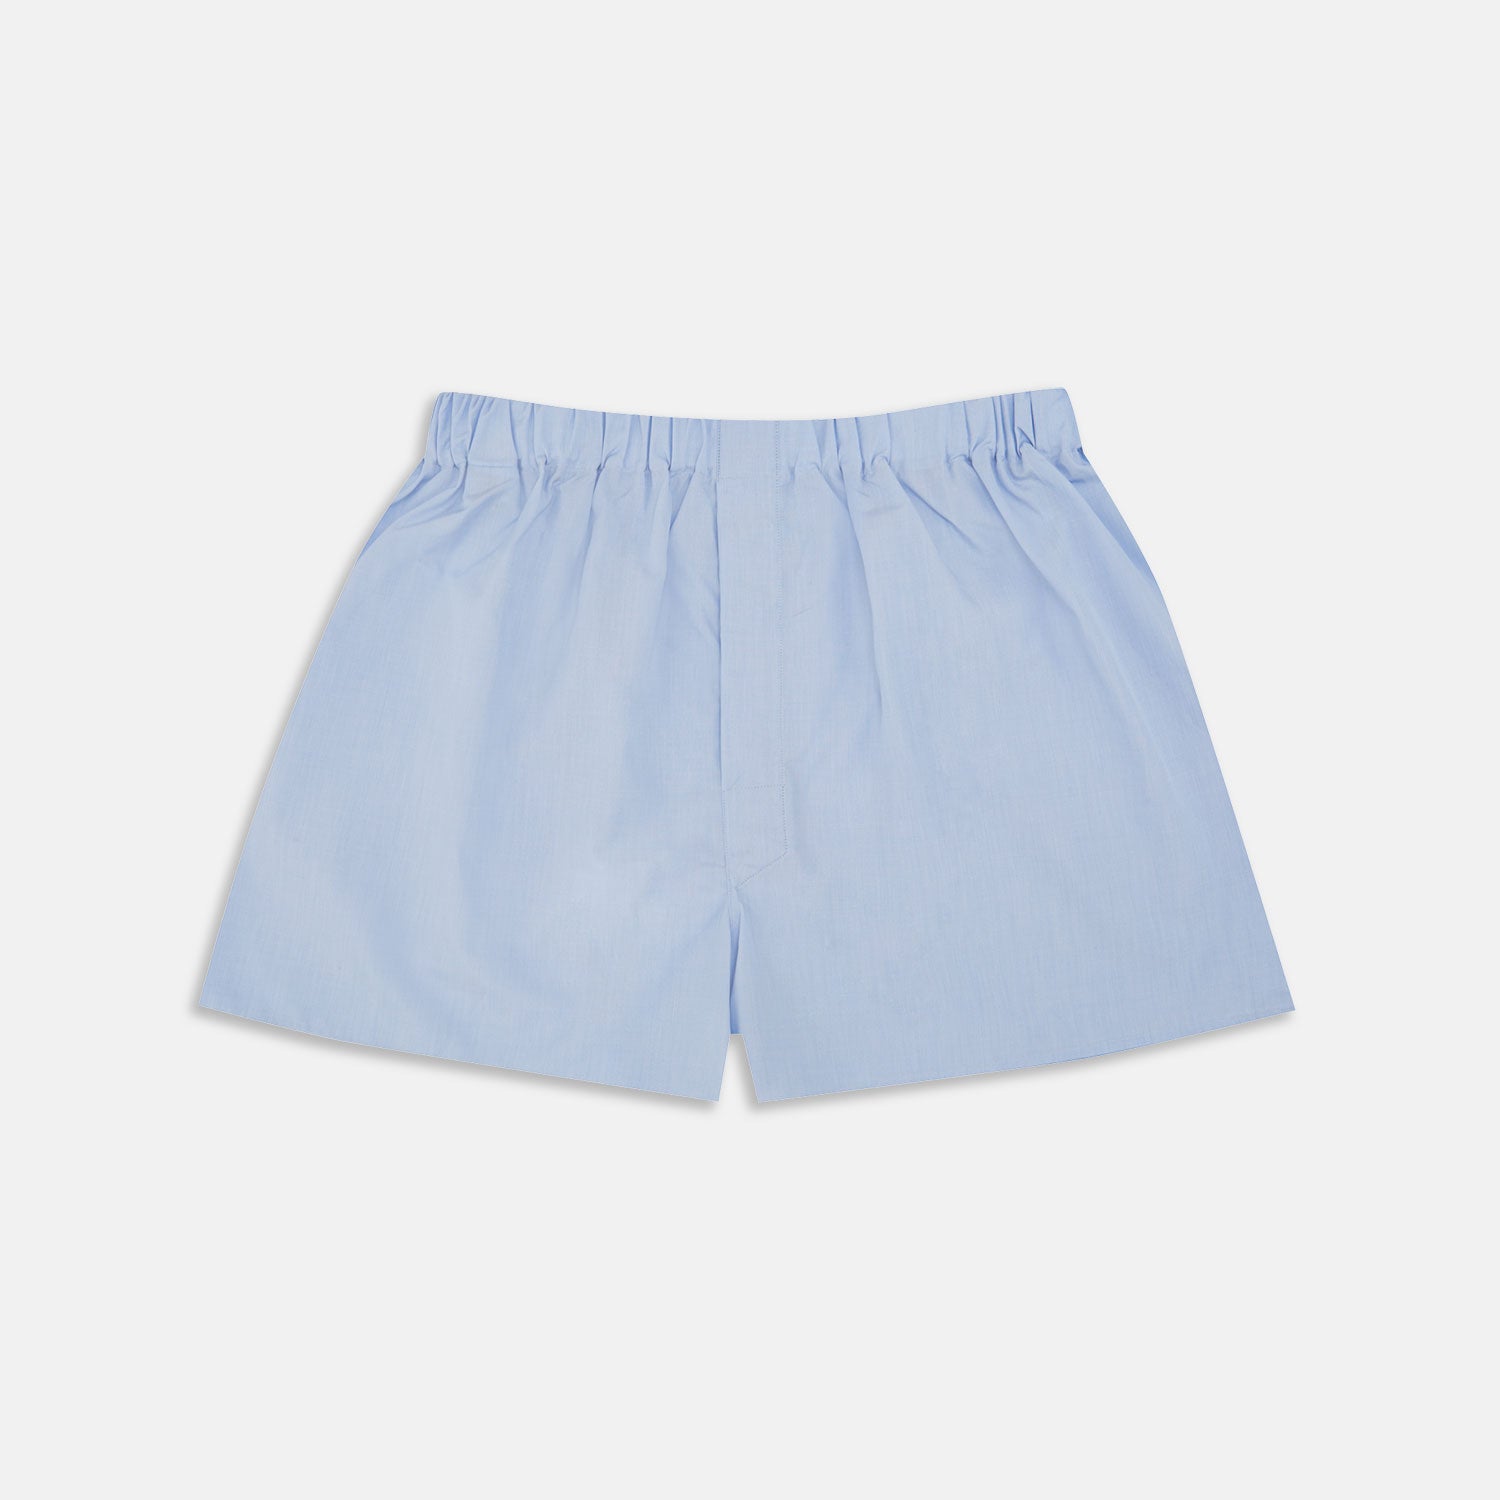 Plain Blue Sea Island Quality Cotton Boxer Shorts